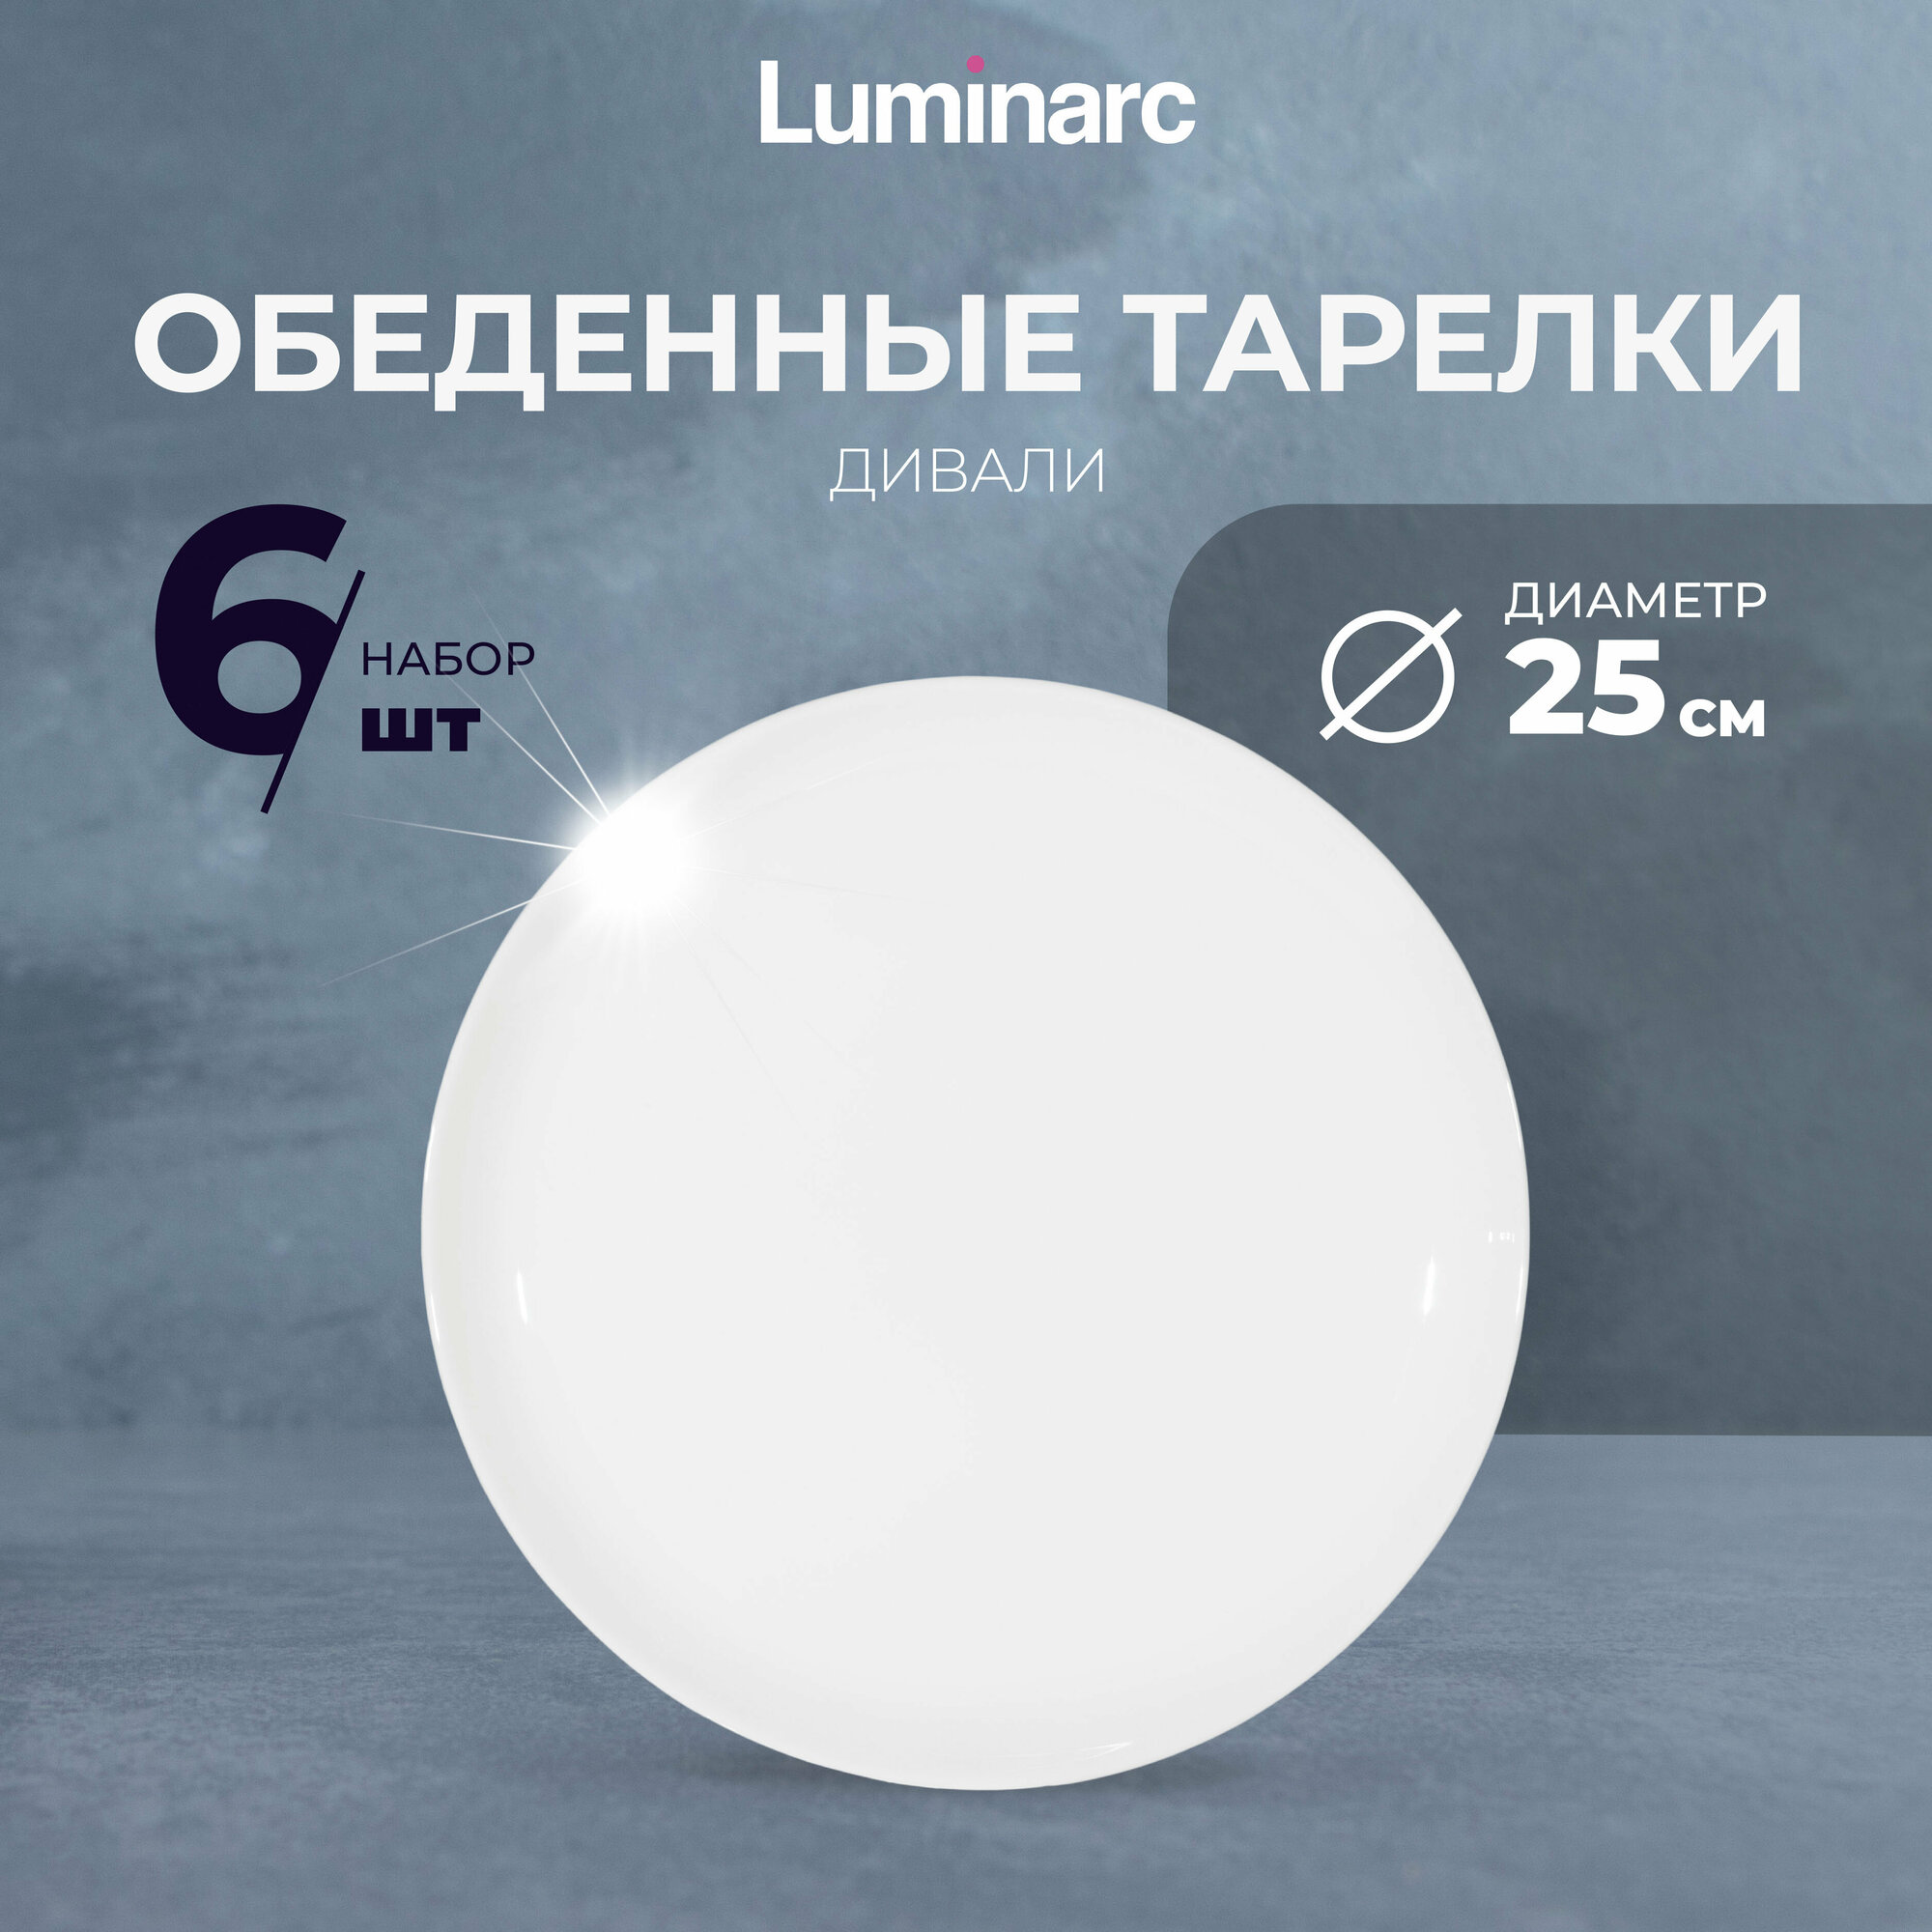 Тарелка обеденная Luminarc дивали 25 см тарелки набор 6 шт